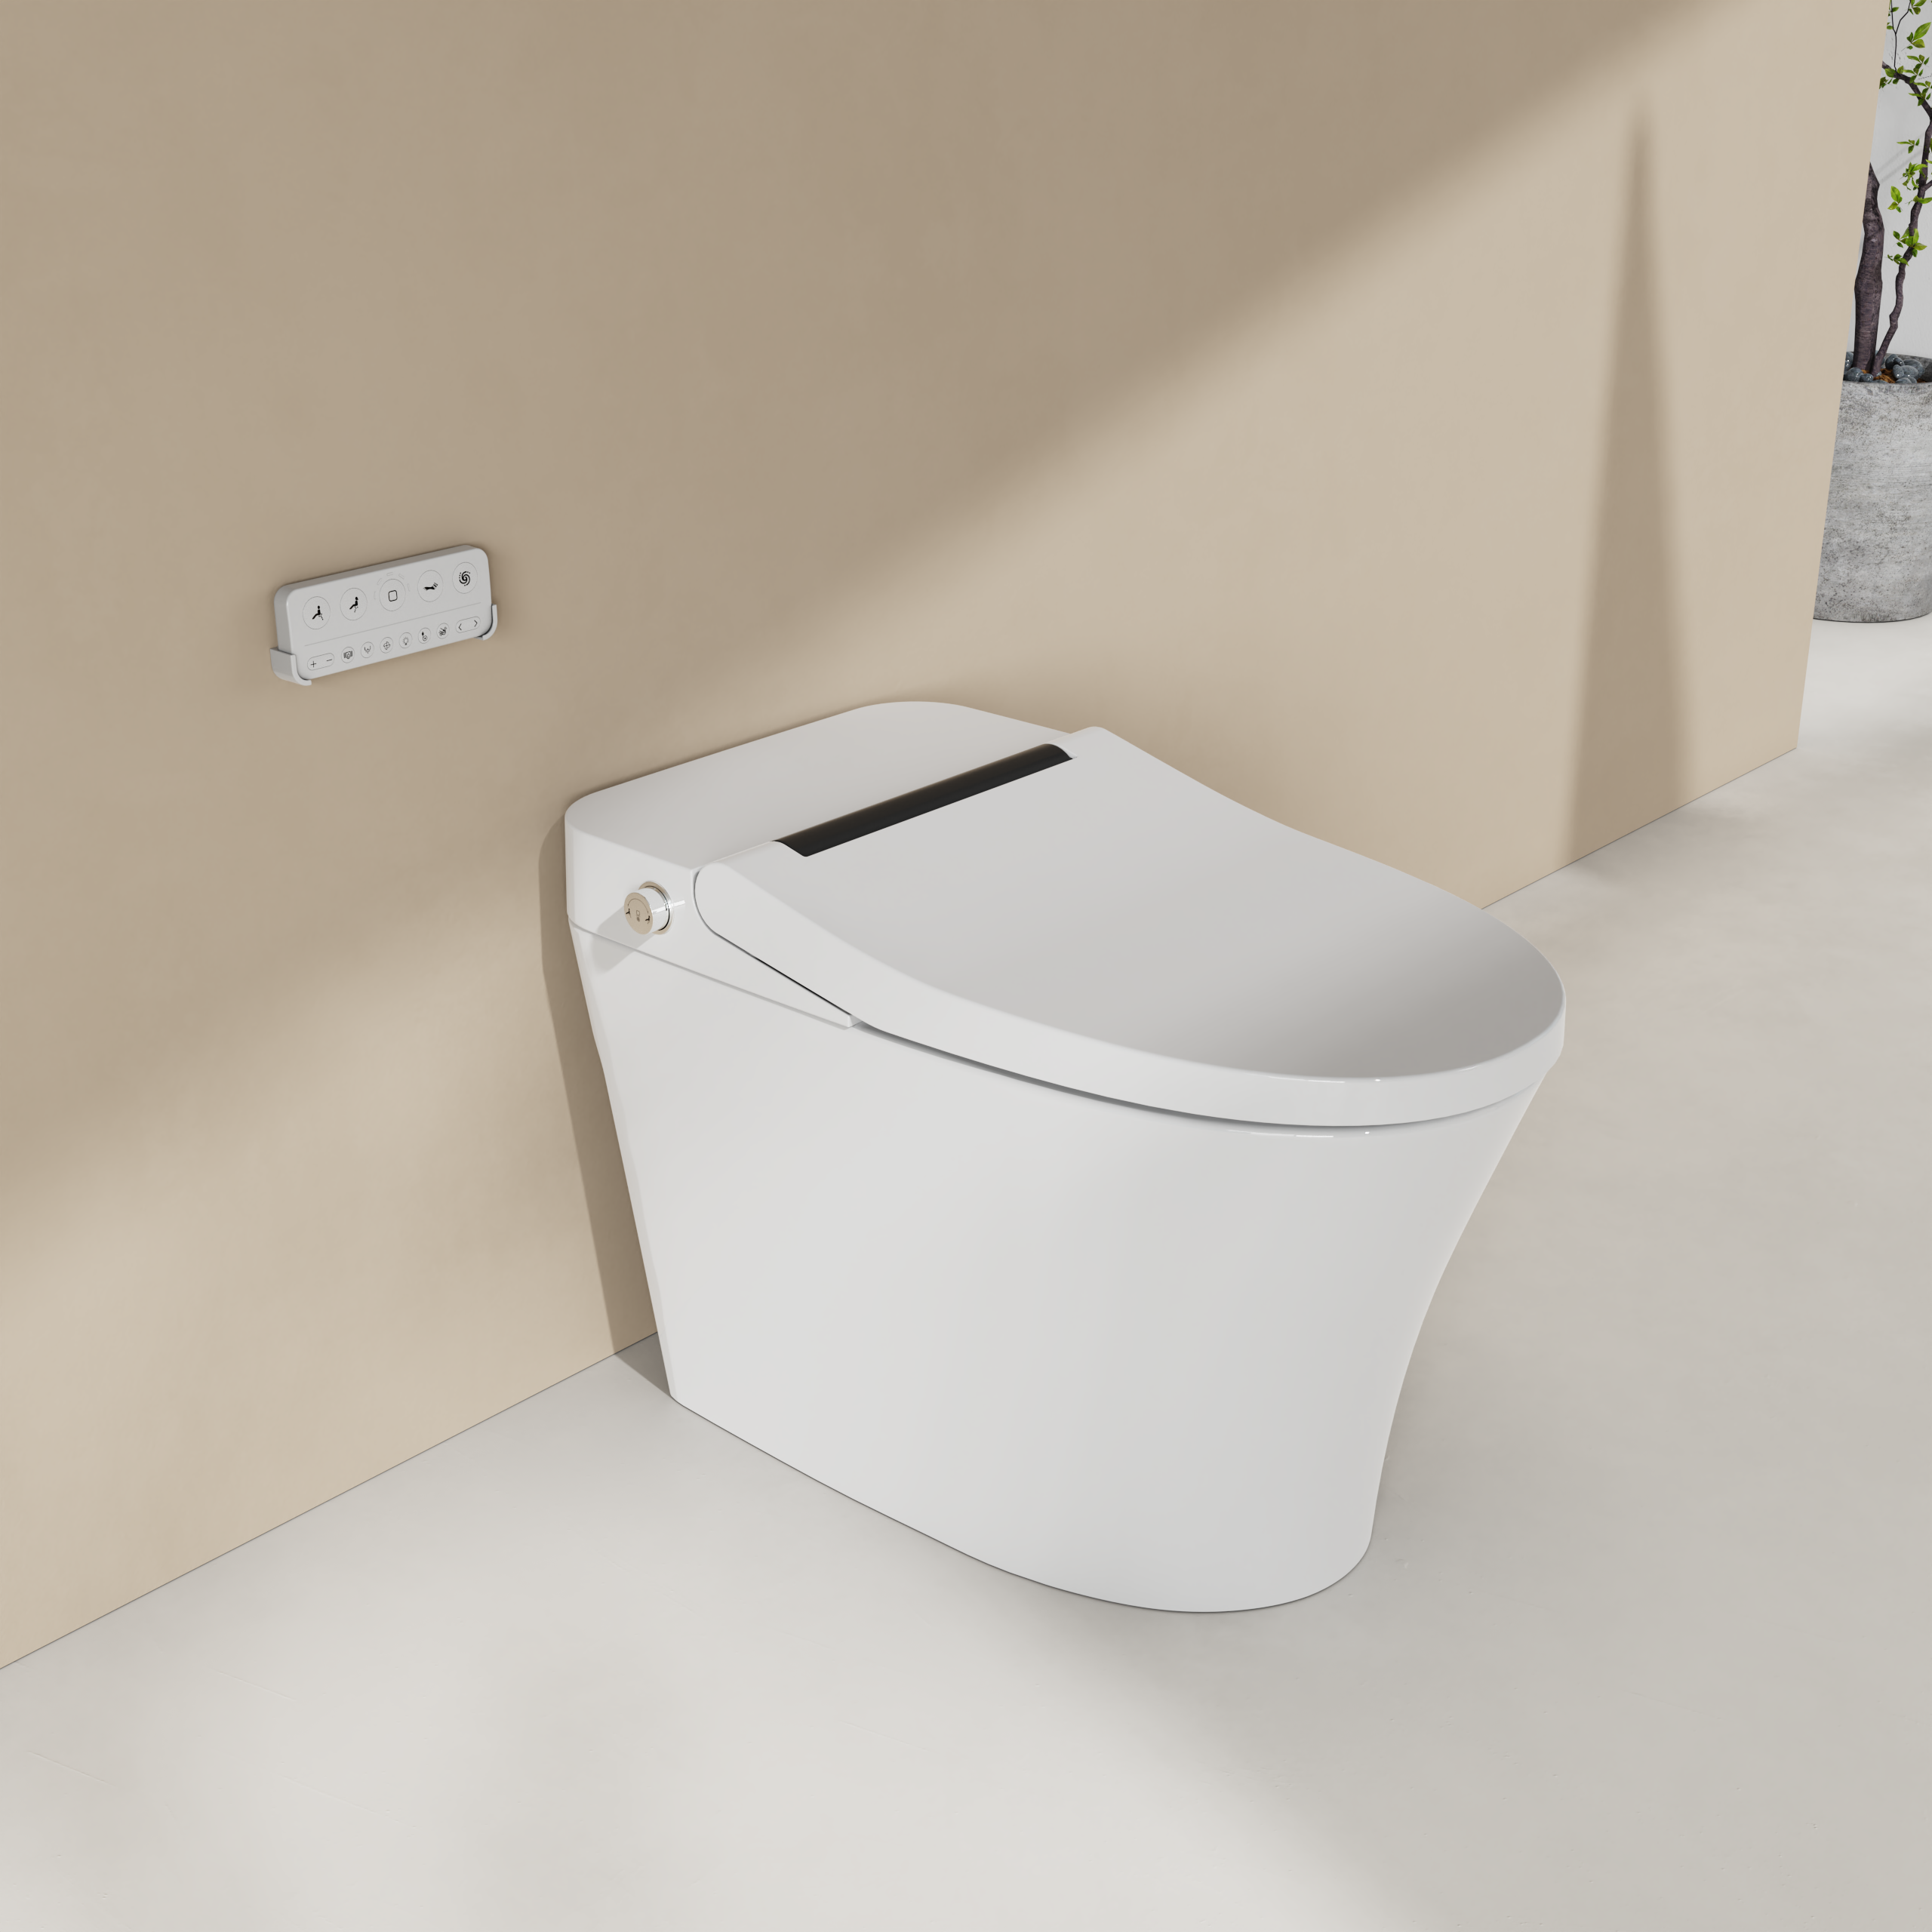 Elongated Smart Toilet Bidet in White with UV-A Sterilization, Auto Flush, Heated Seat